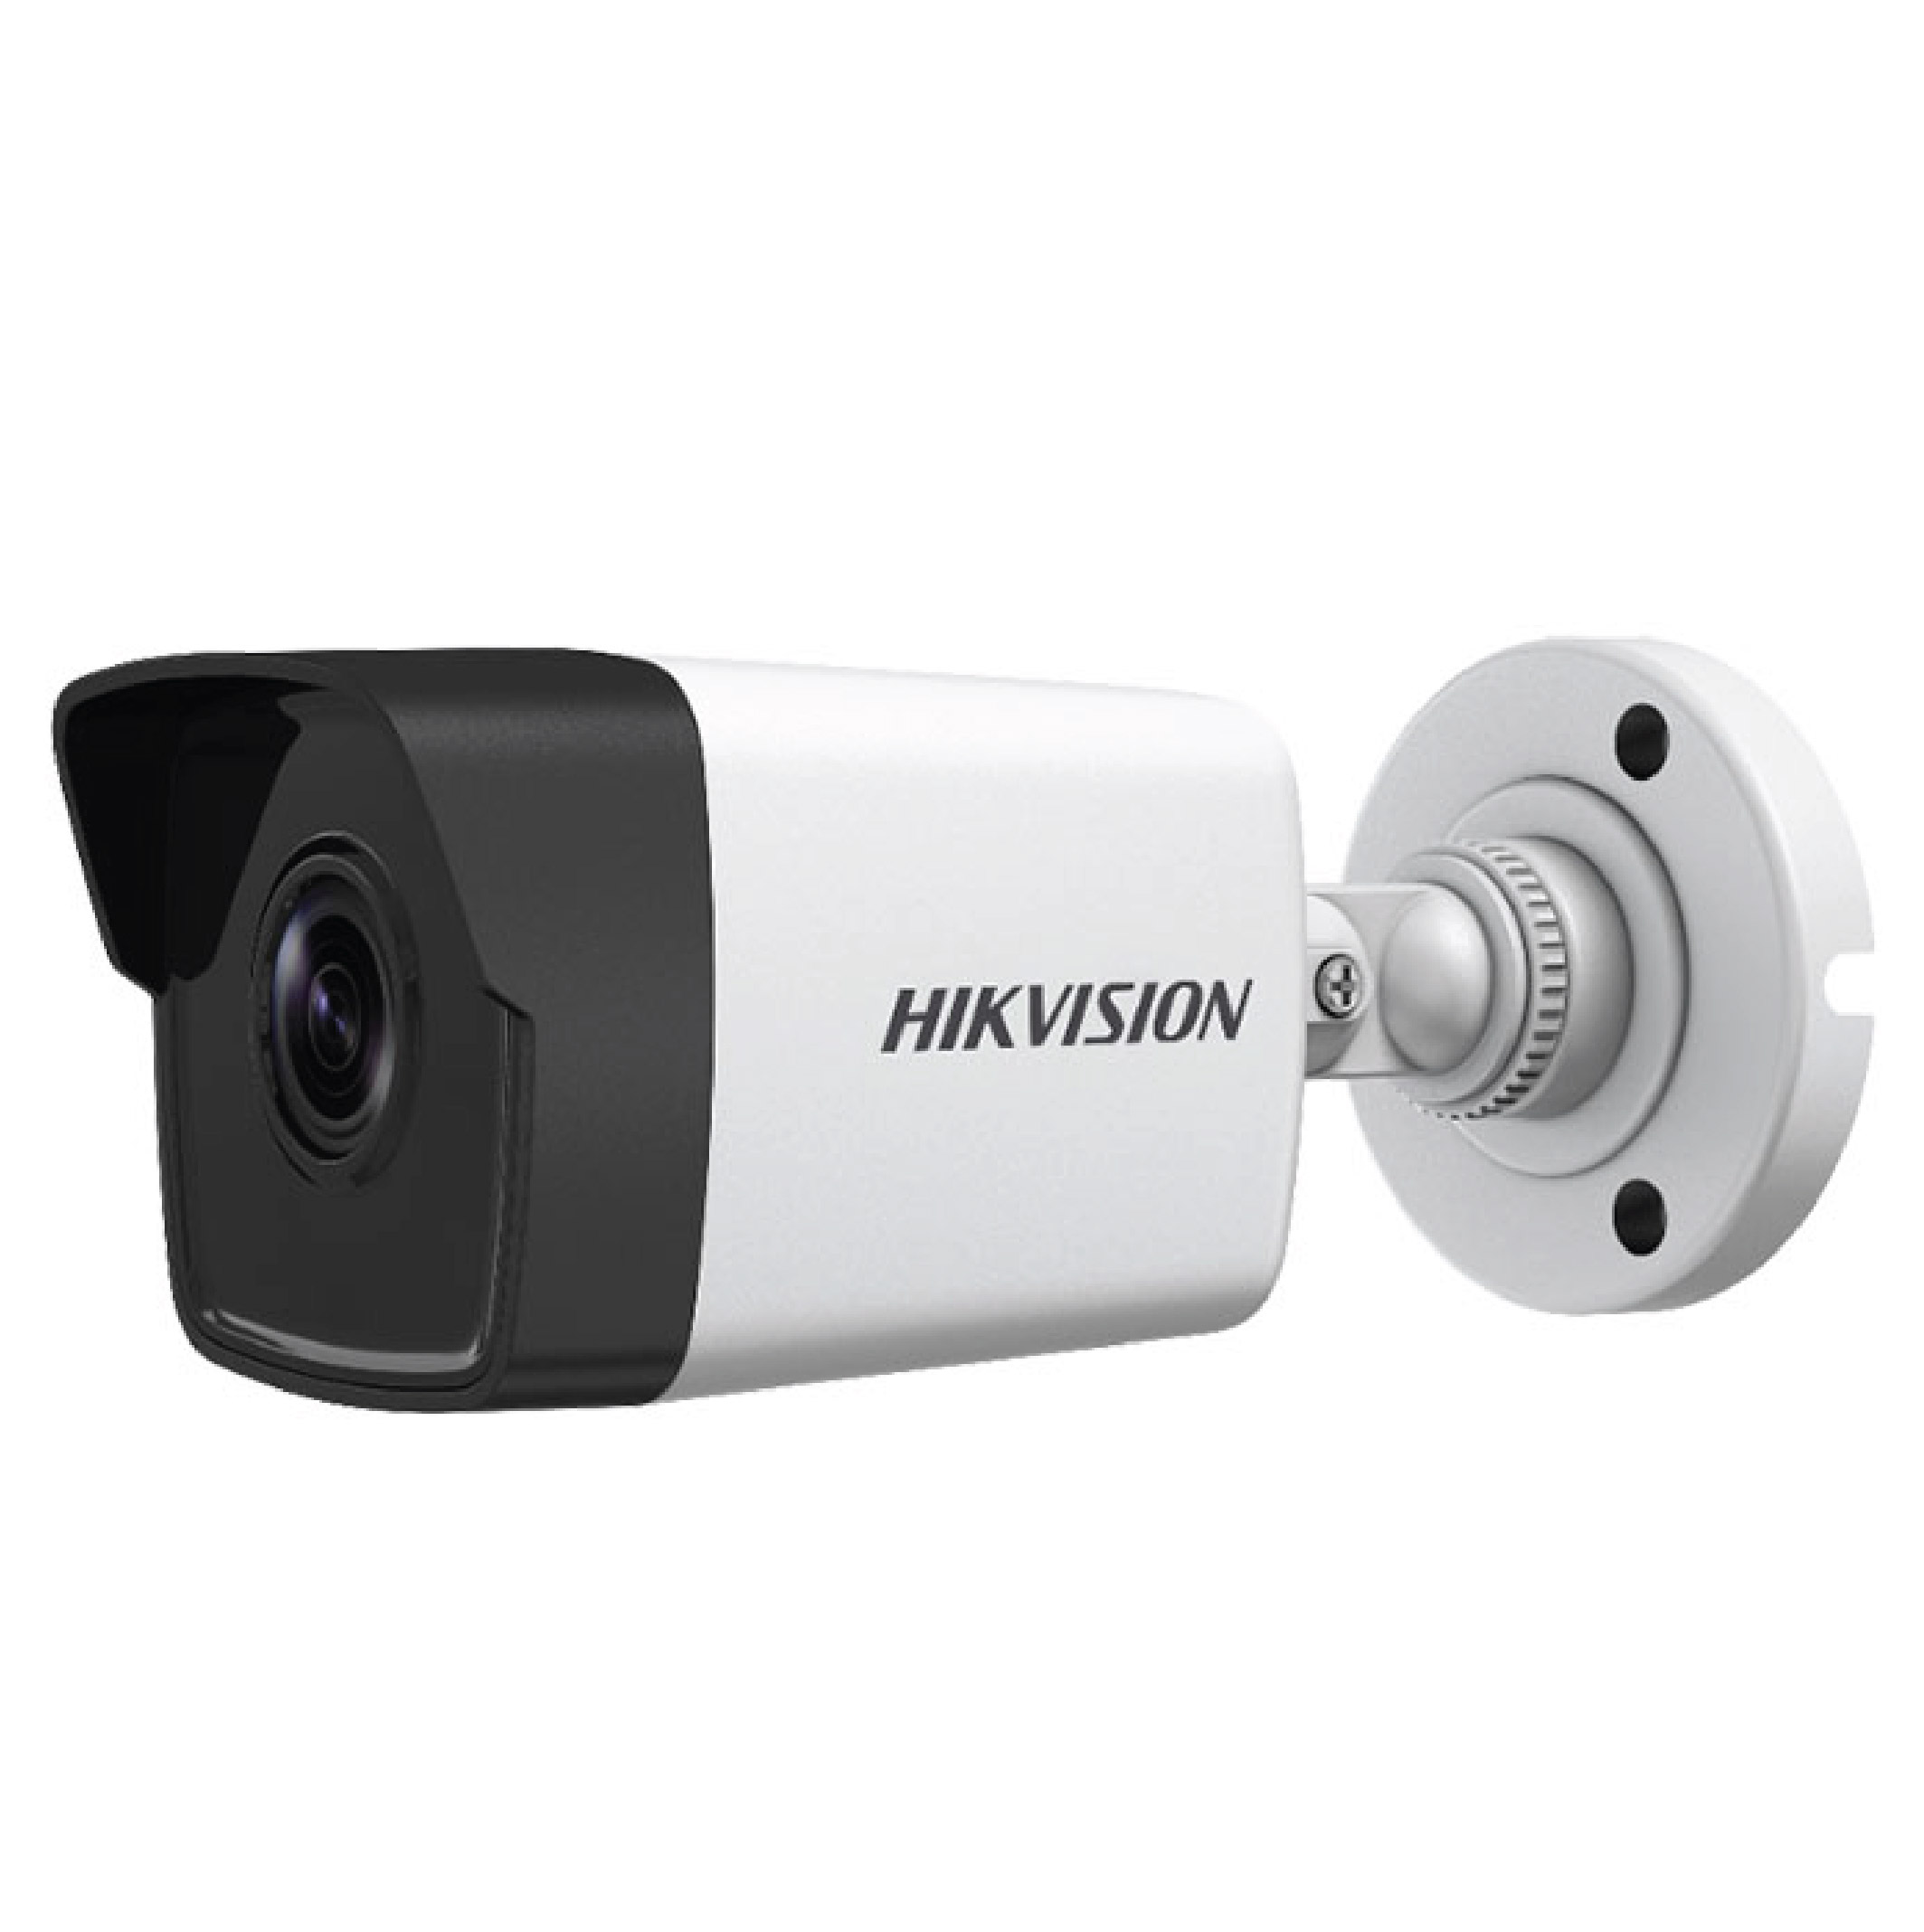 HIKVISION DS-2CD1023G0-I Turbo HD Camera